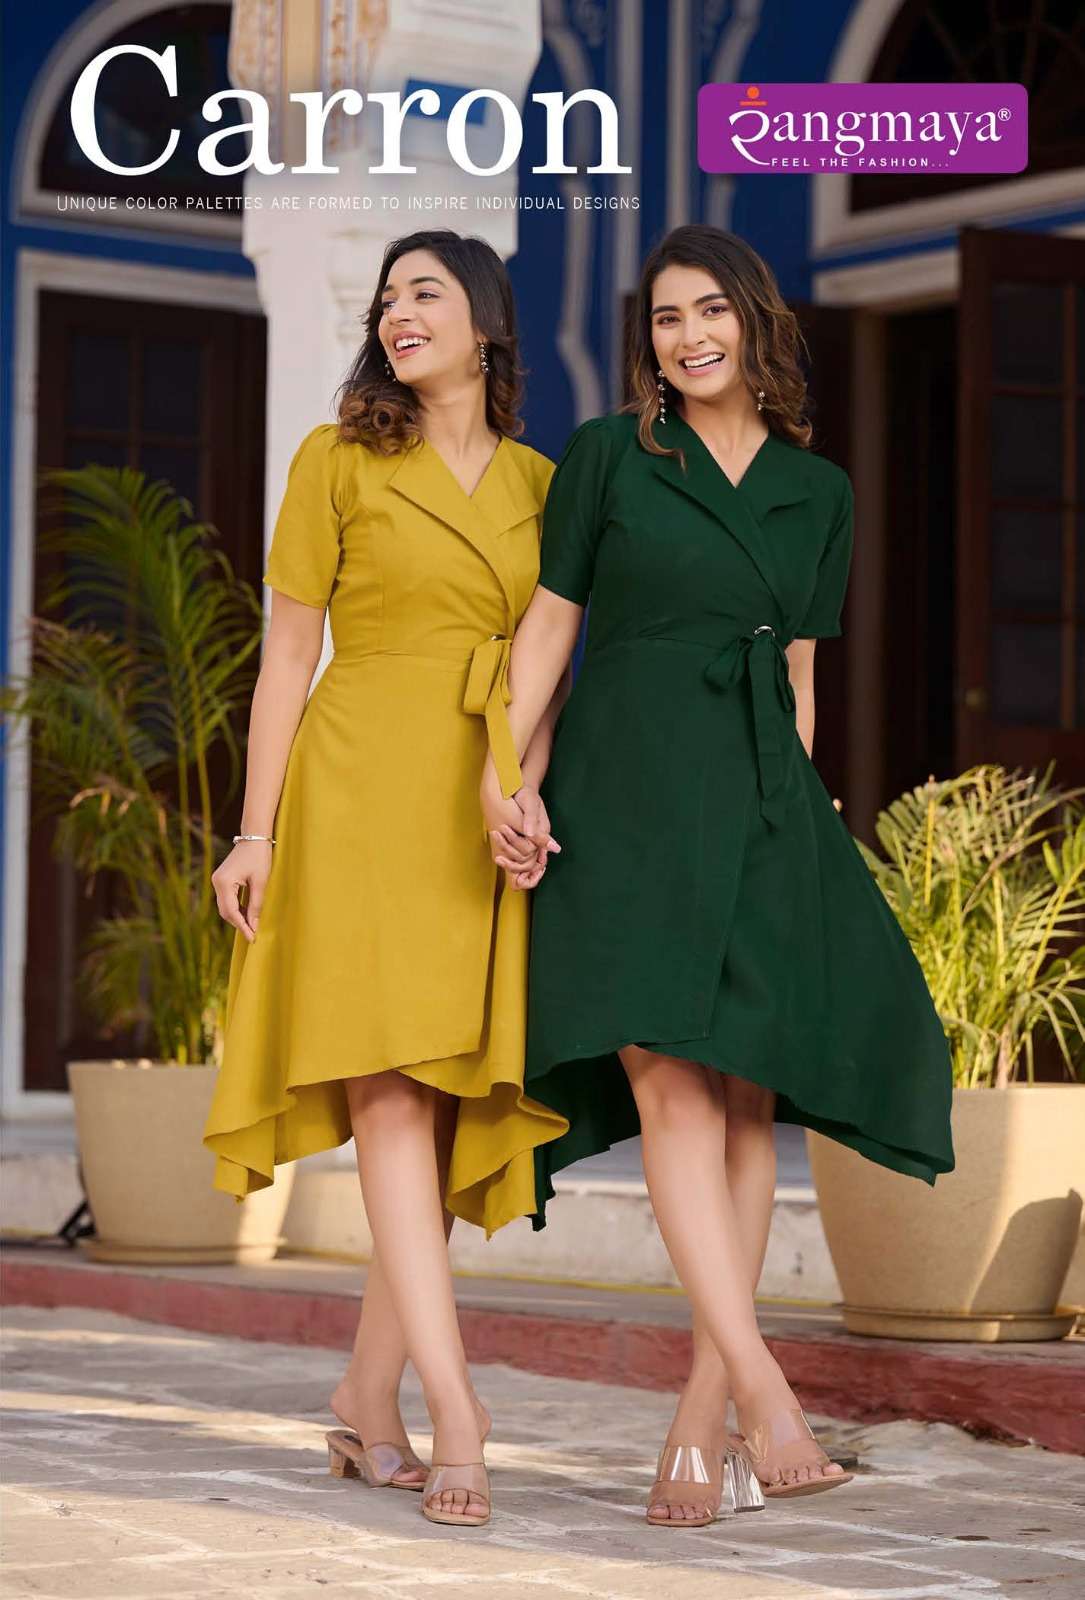 Rangmaya Carron Ladies Wear Western Outfit Catalog Exporters